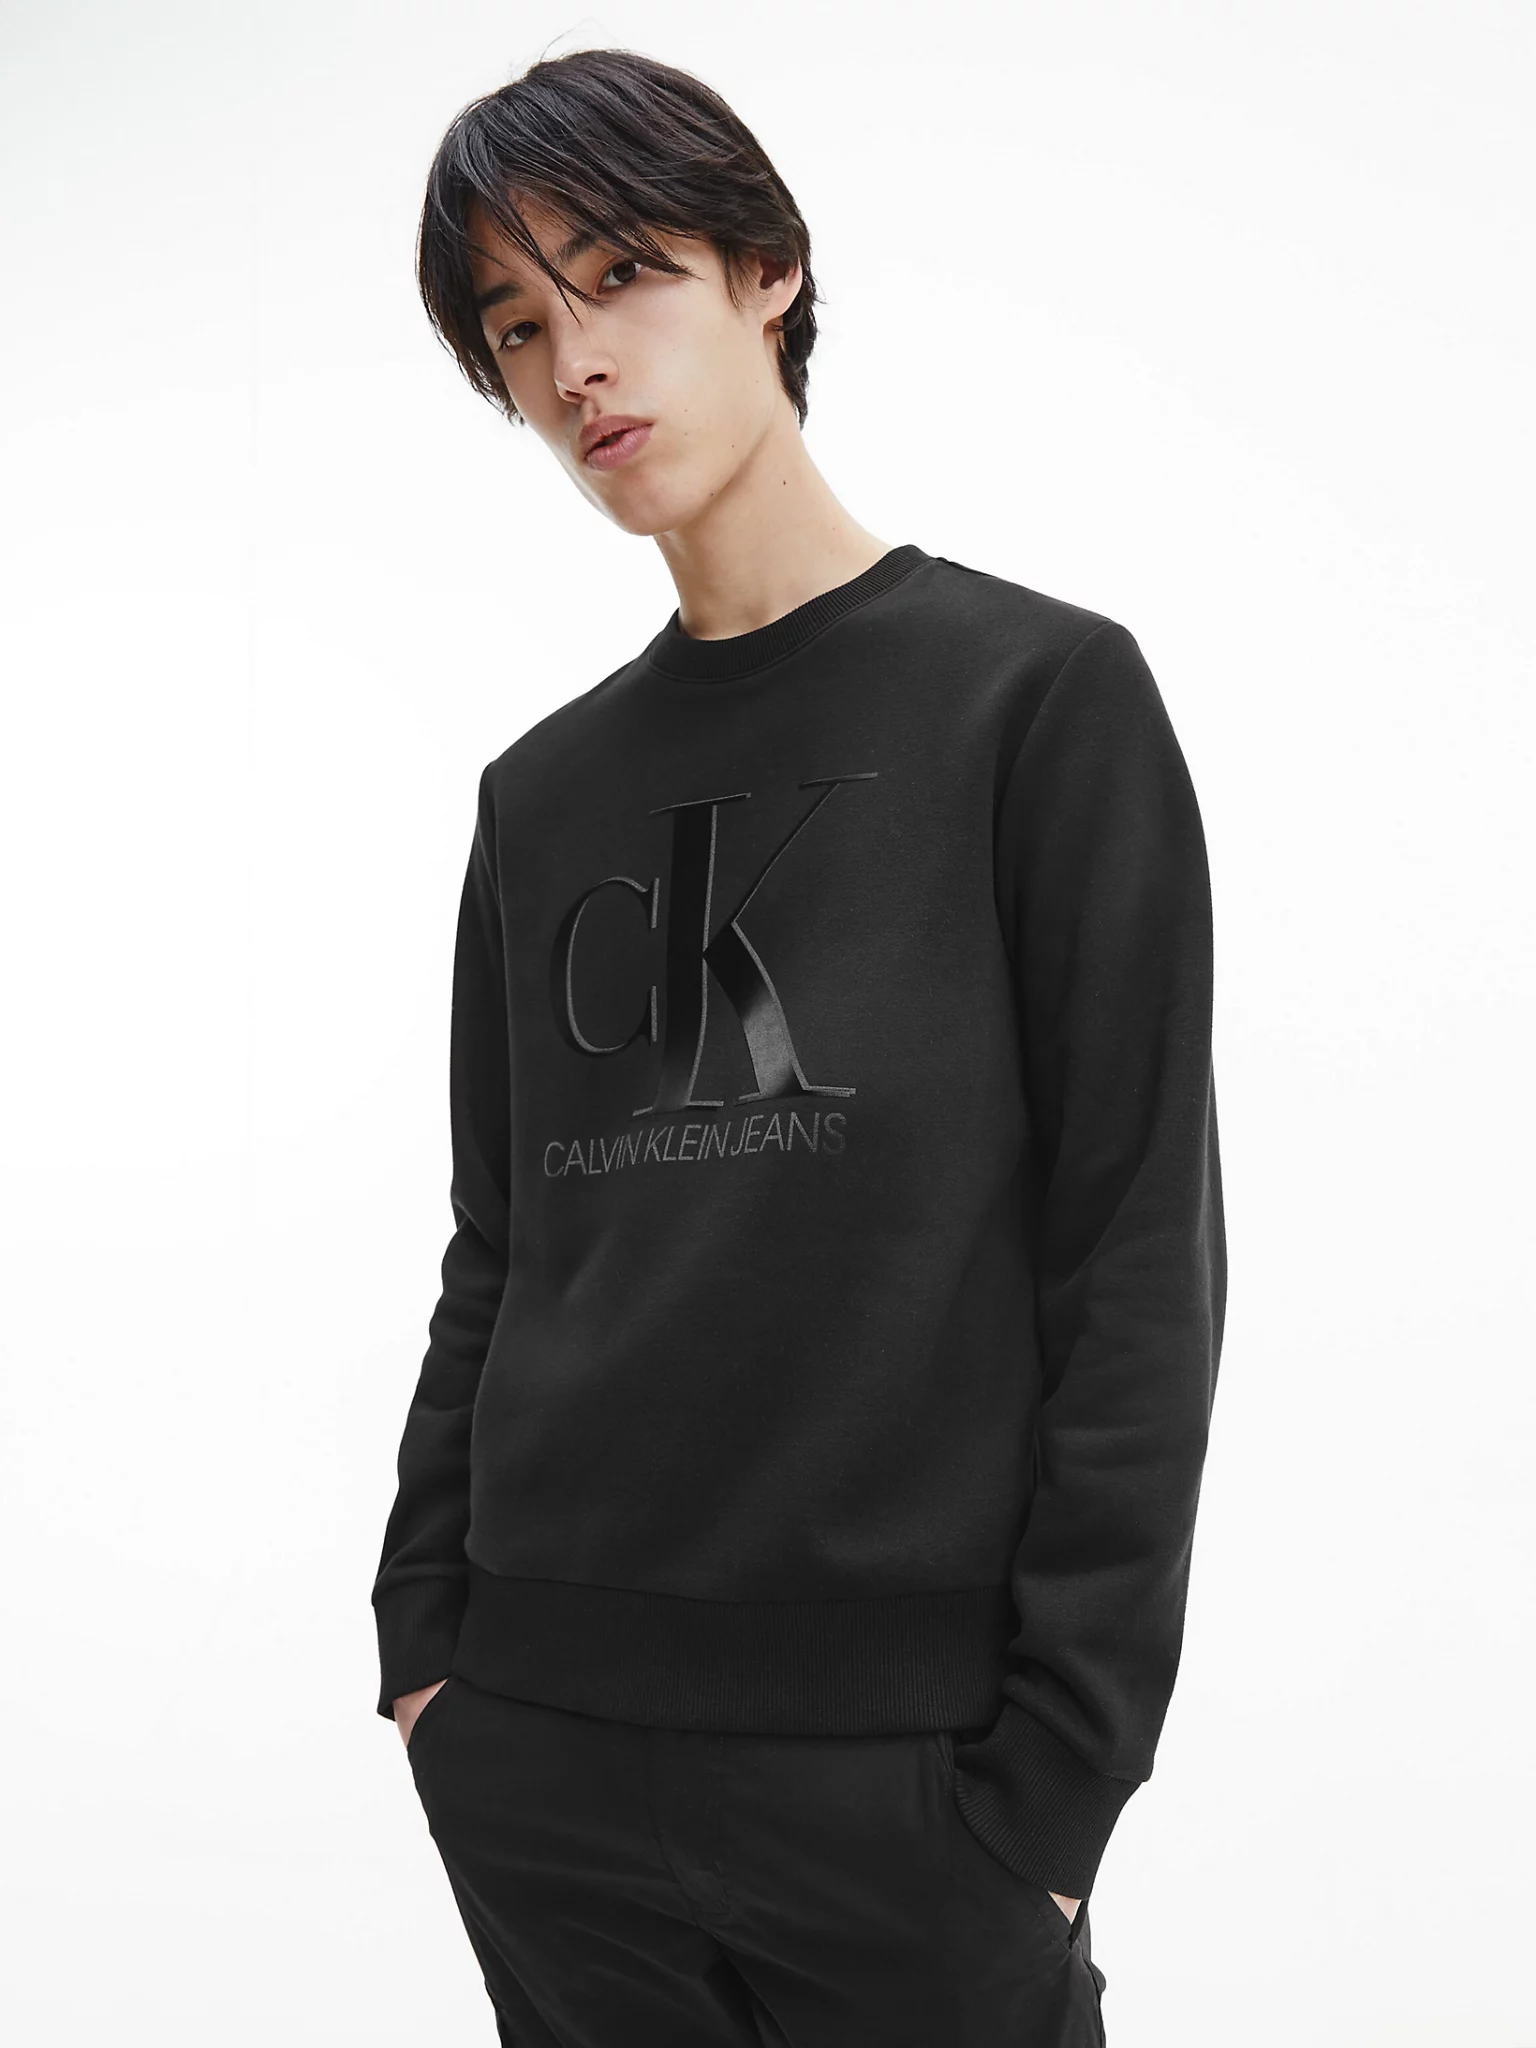 Klein Black Scandinavian Sweatshirt - Store Buy Monogram Leather Calvin Logo Fashion